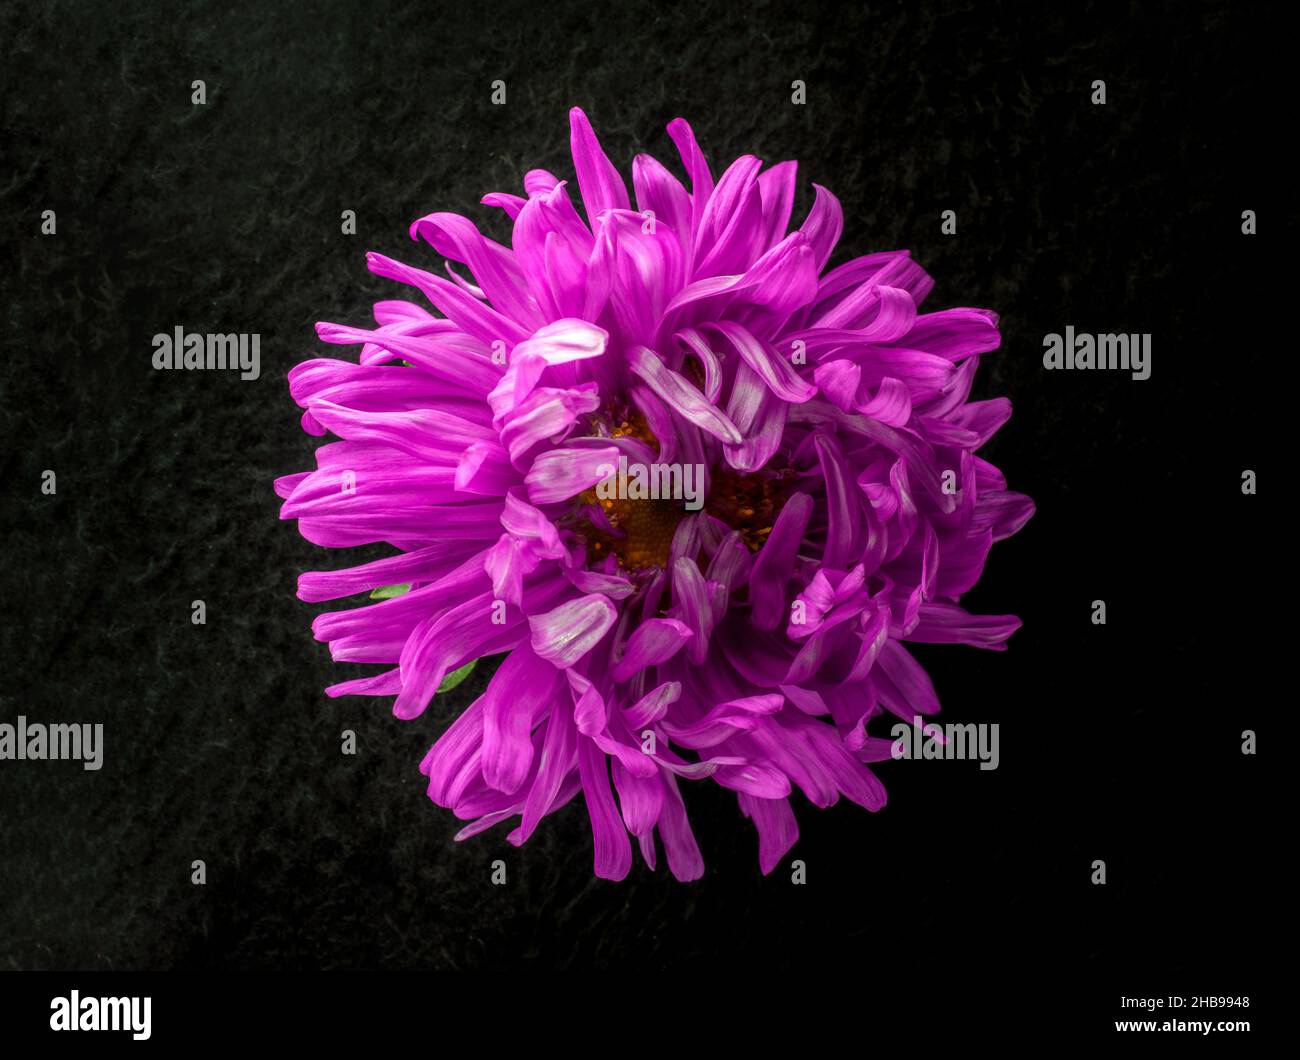 Studio shot of flower on black background. On a dark background. Stock Photo